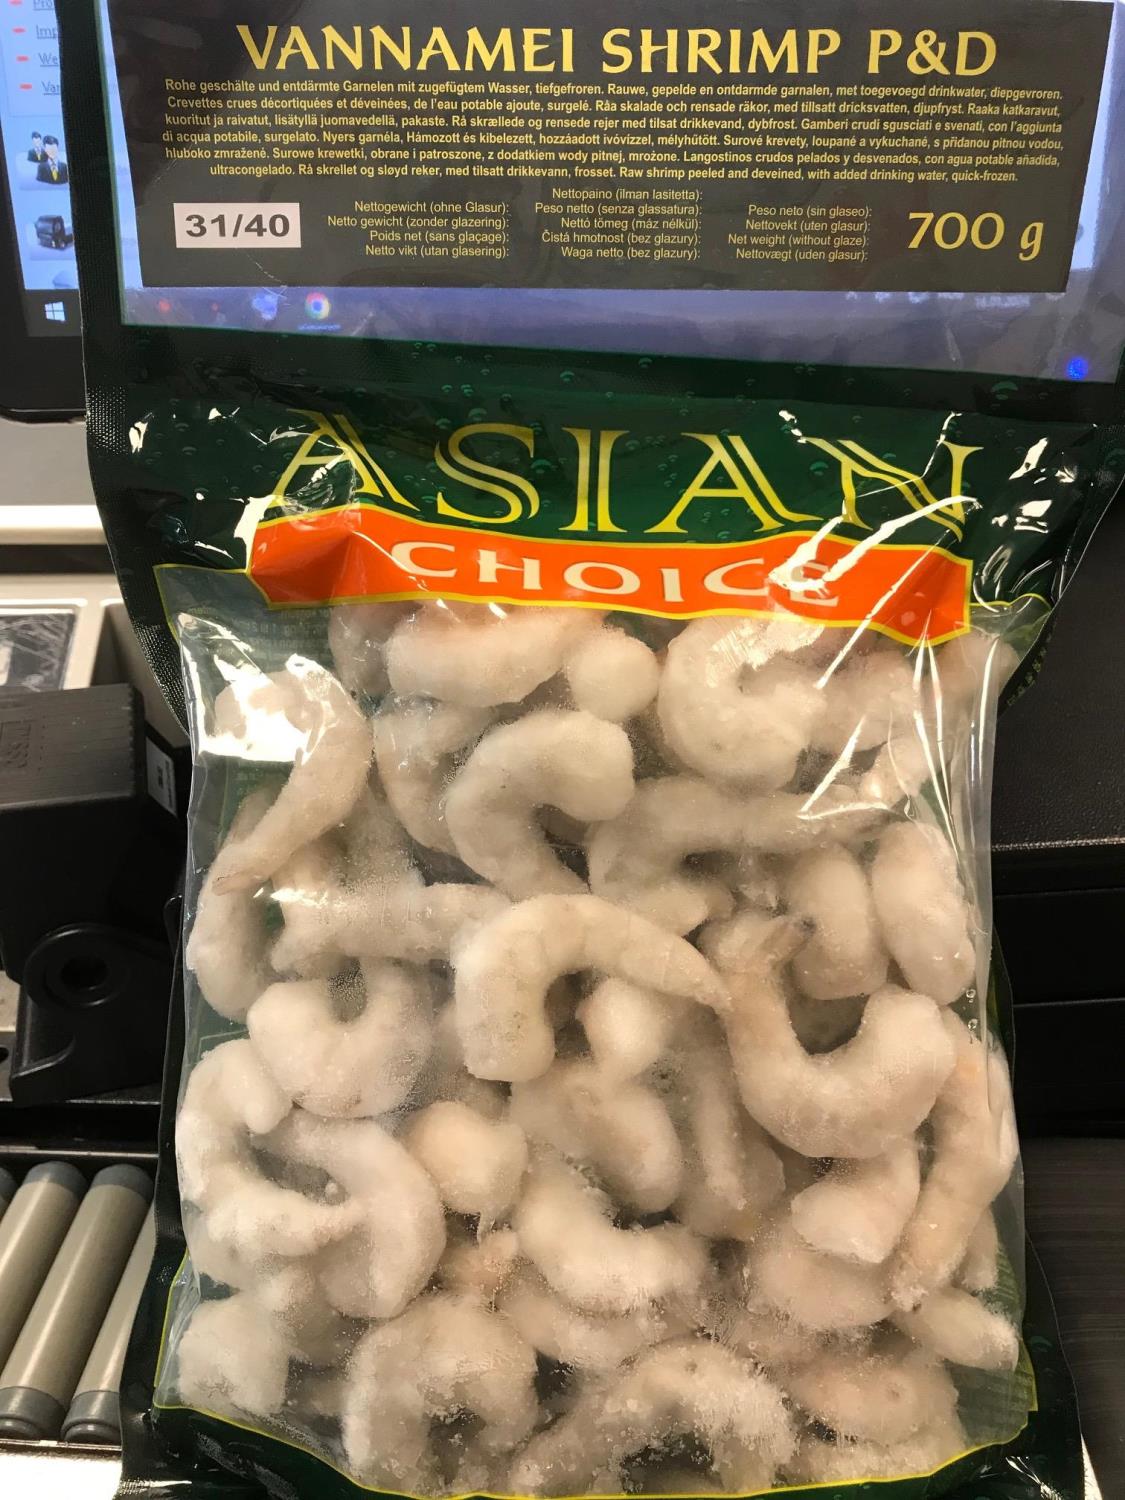 Aisa Choice Vannamei Shrimp P&D (31/40) net weight 700G 亚选淡水虾净重700克